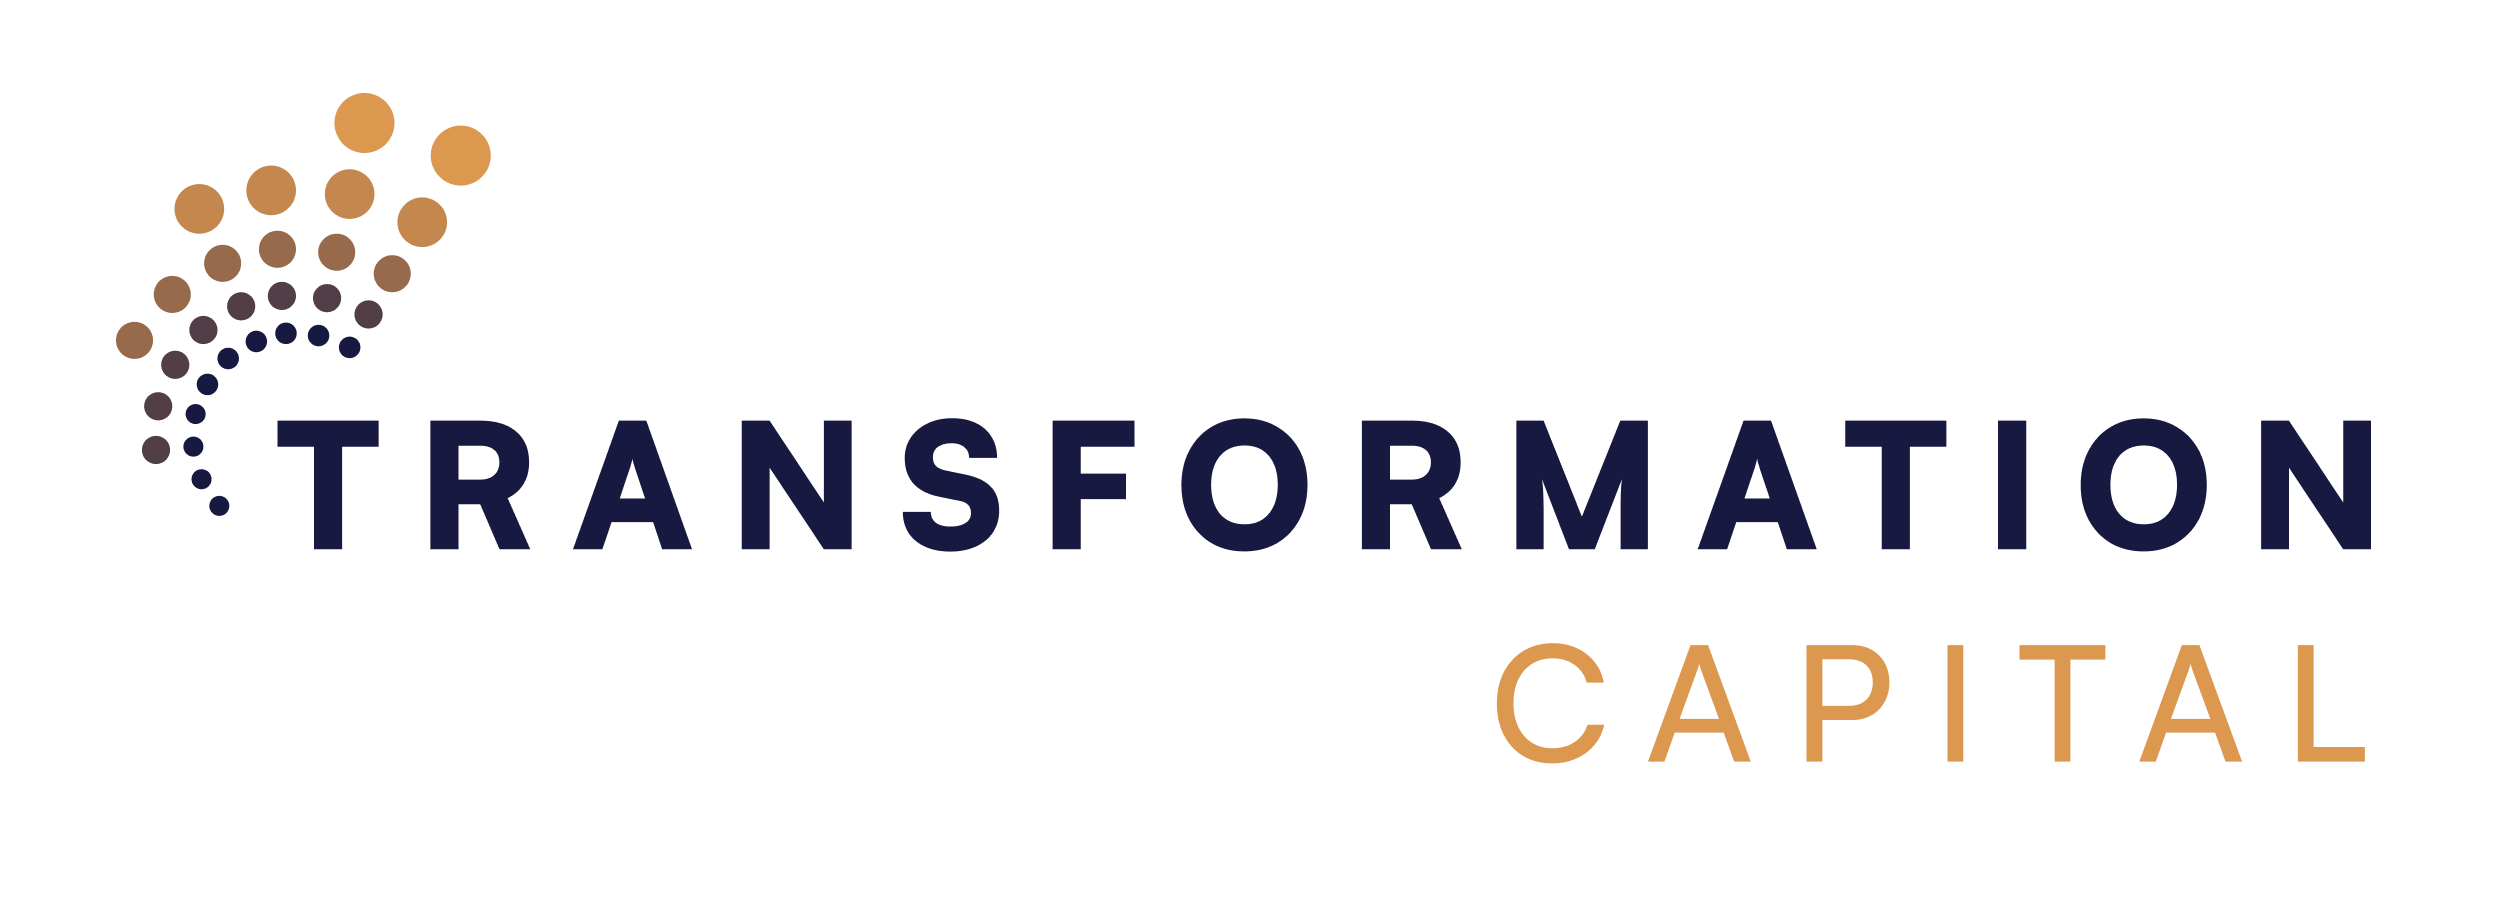 Transformation-Capital-Logo-Vertical-Full-Color